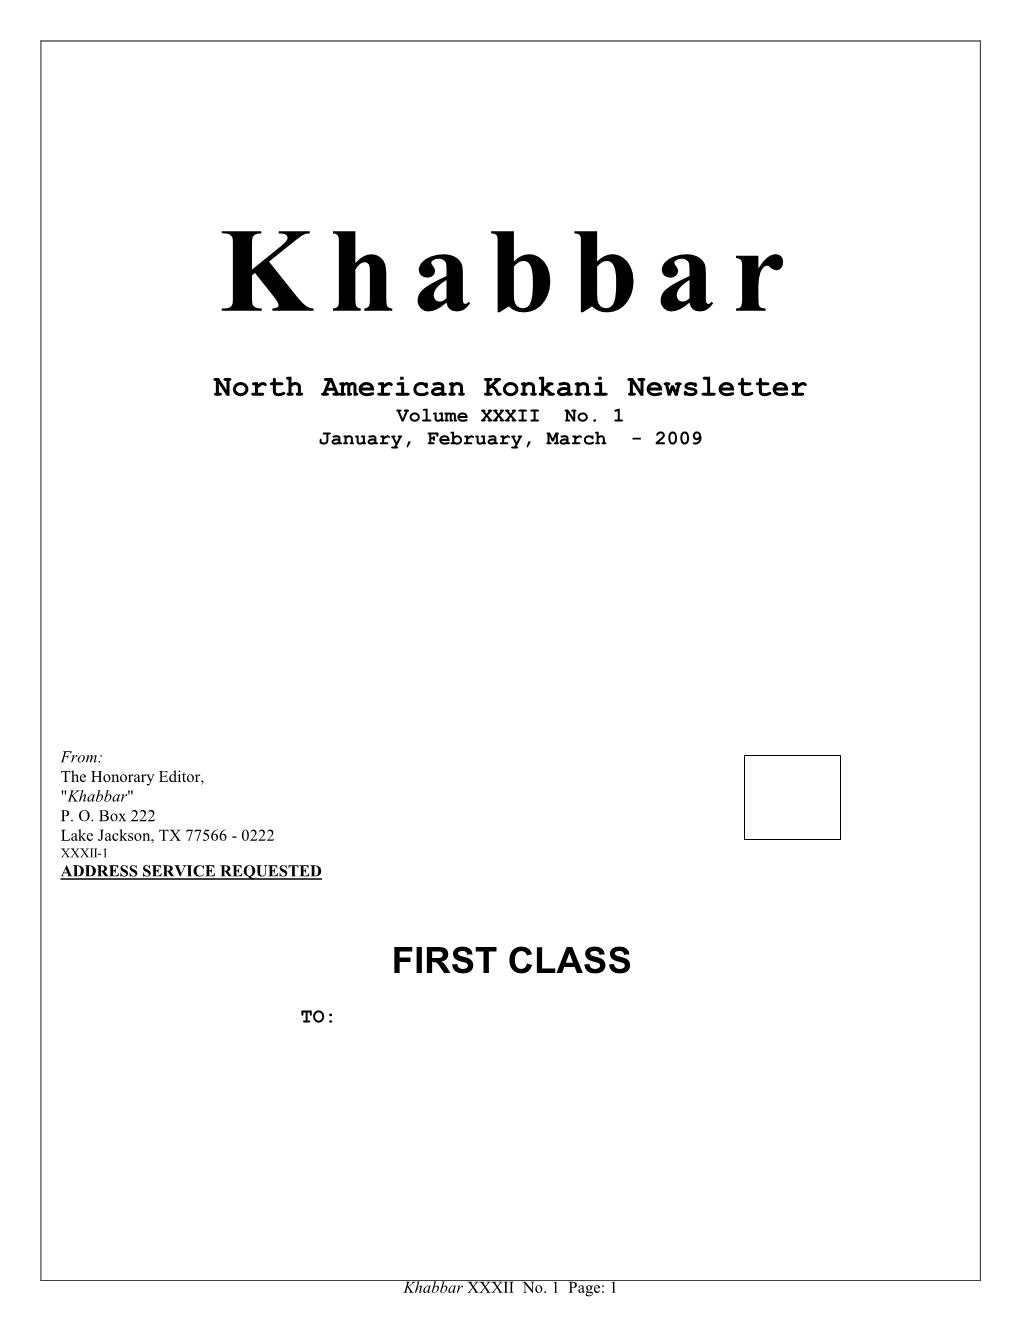 Khabbar Vol. XXXII No. 1 (January, February, March